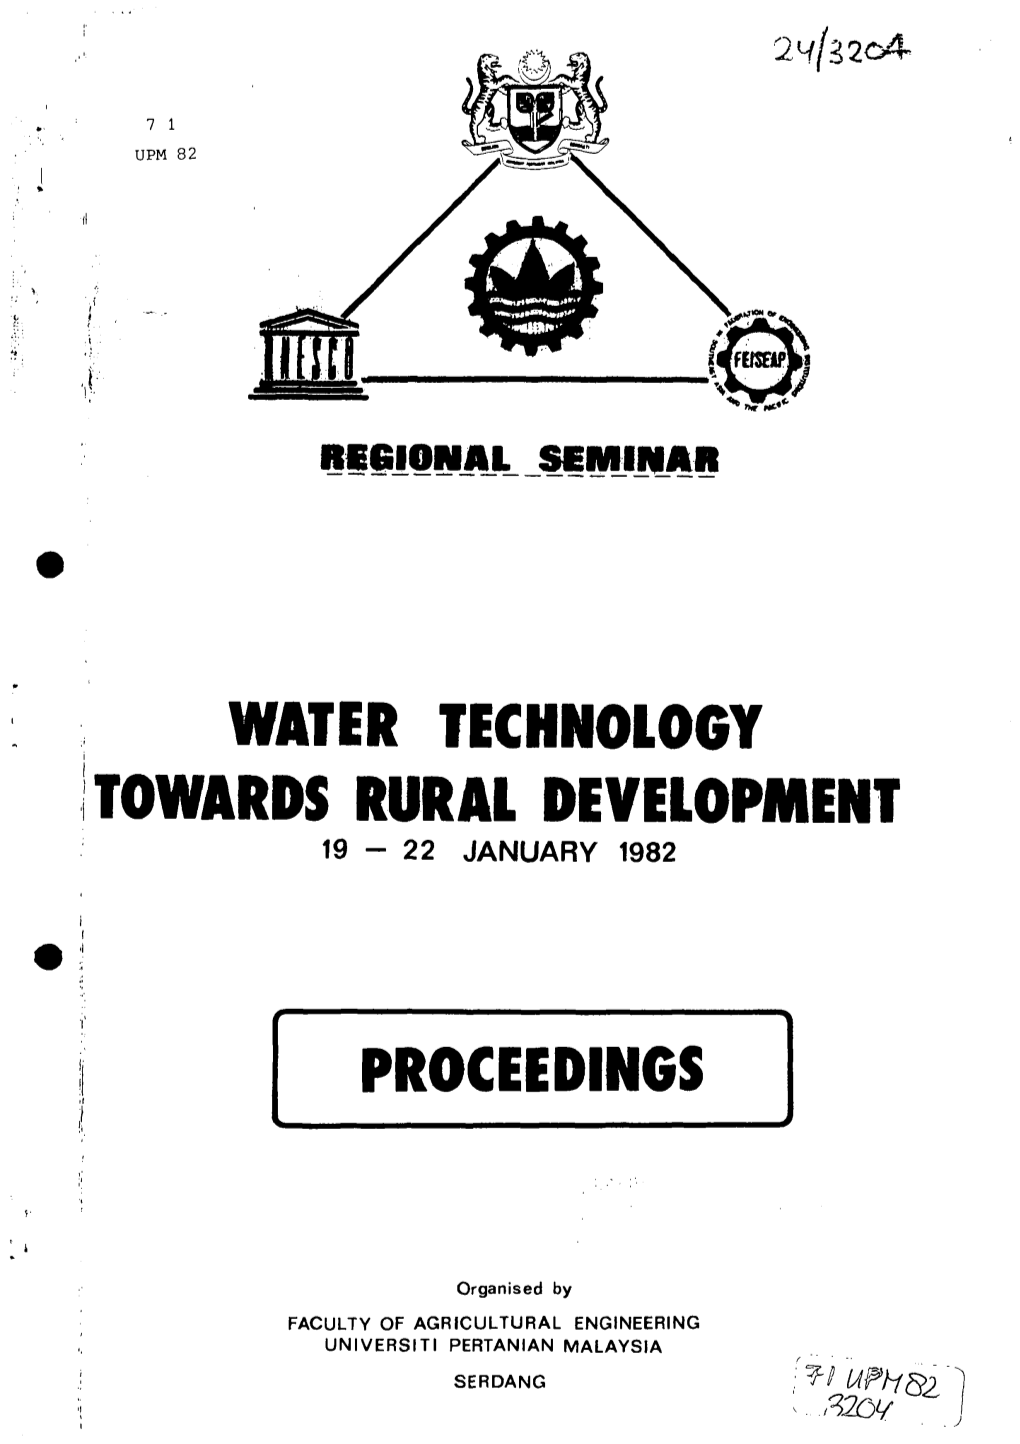 Water Technology Towards Rural Development 19 - 22 January 1982